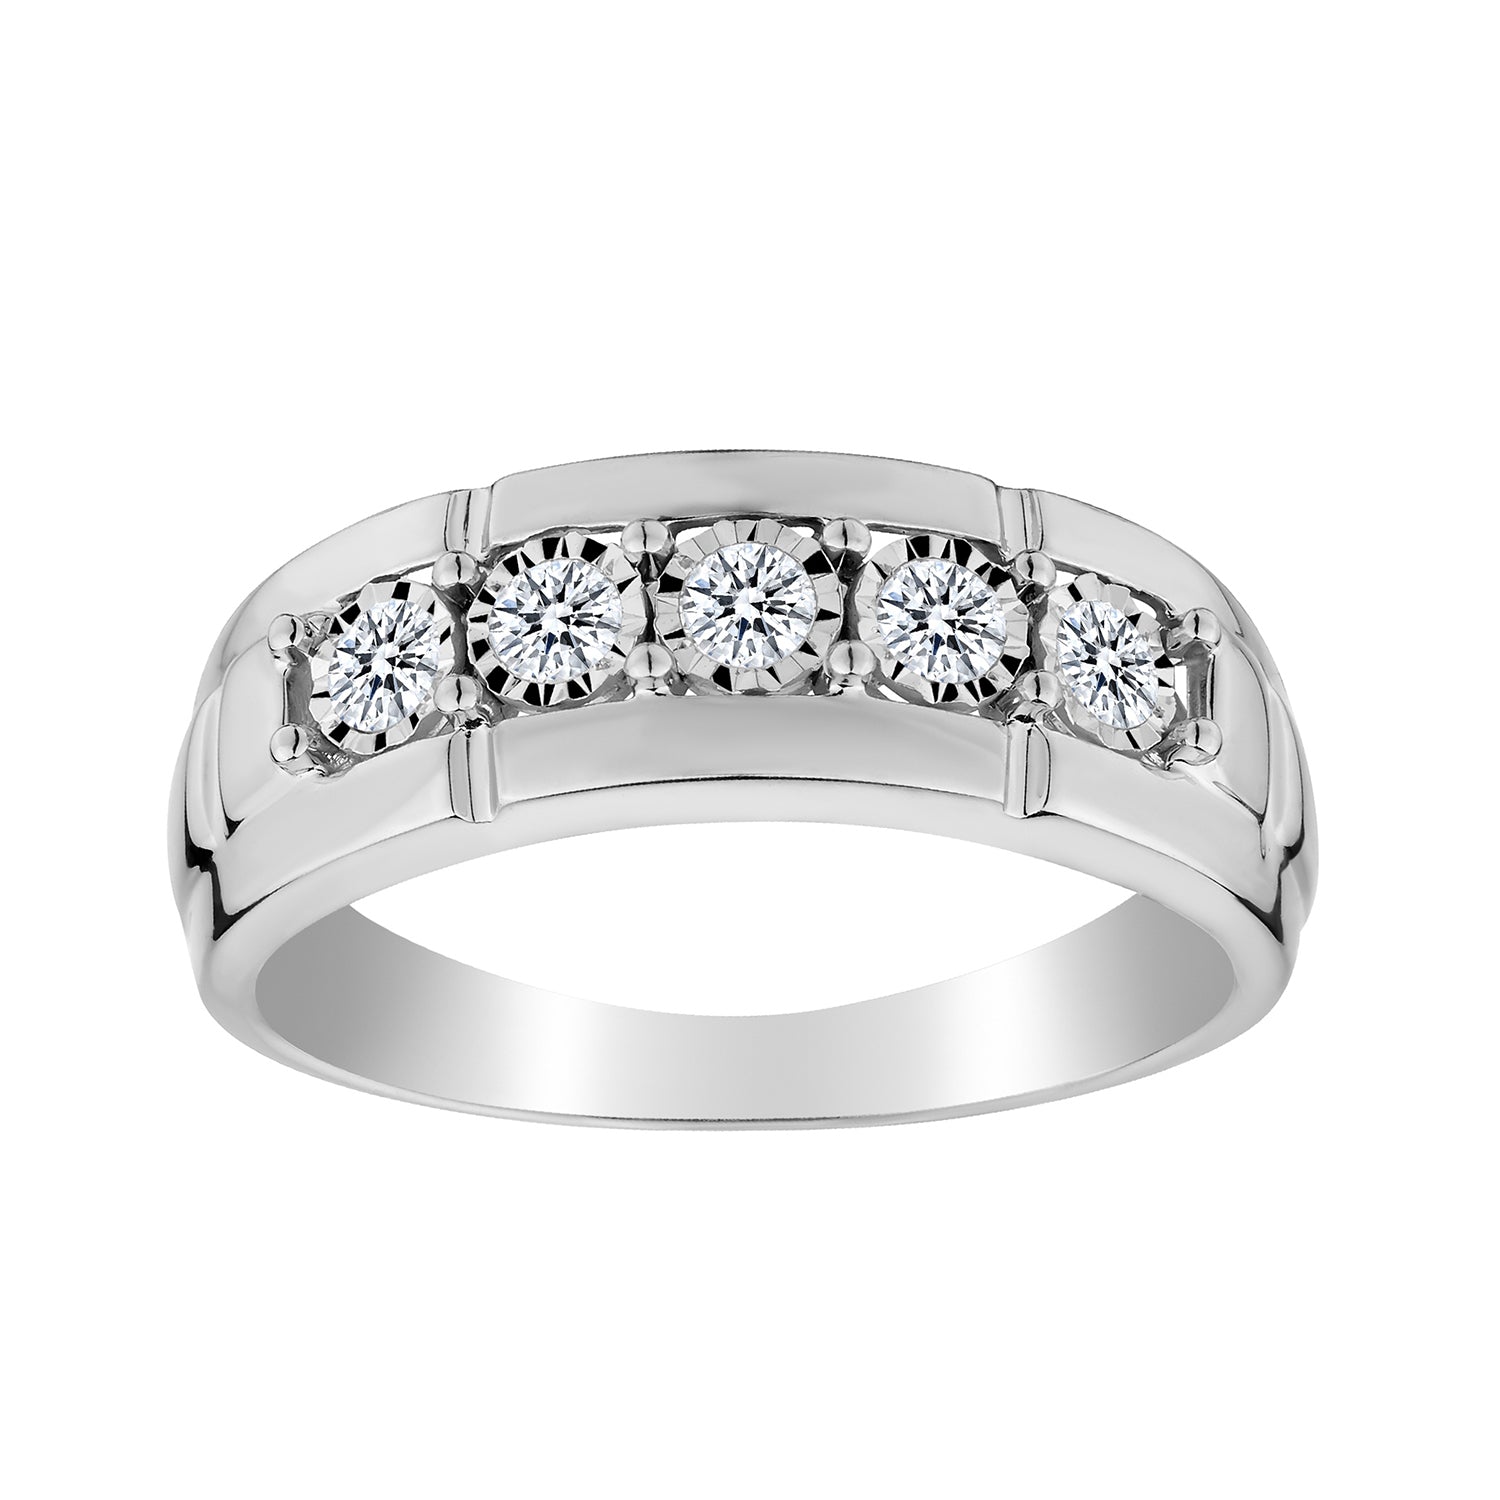 .40 Carat of Diamonds Gentleman's Ring, 10kt White Gold....................NOW